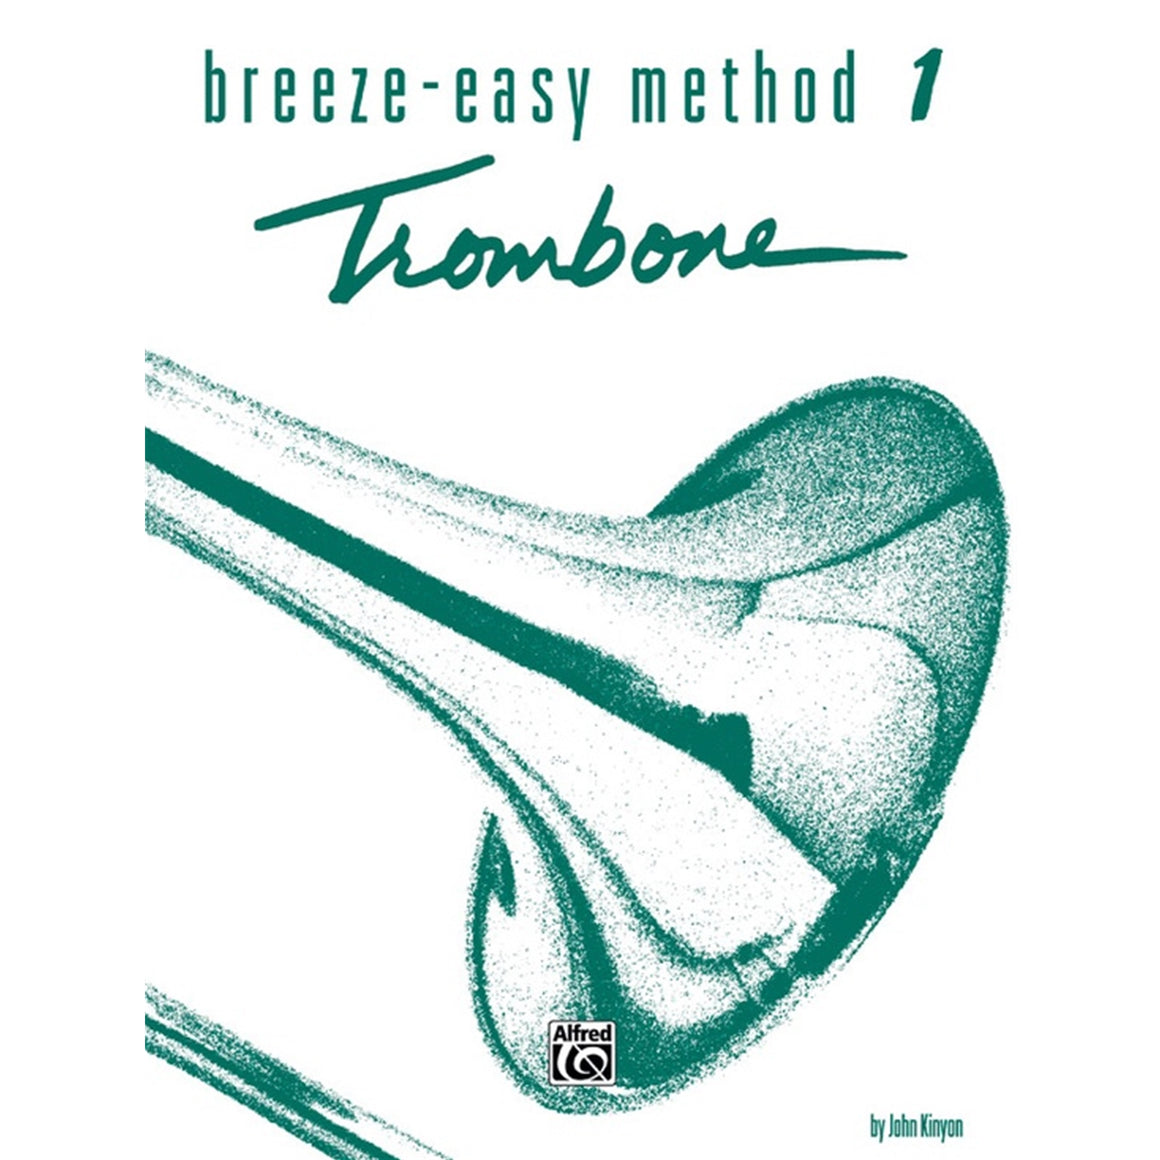 ALFRED 00BE0017 Breeze-Easy Method for Trombone or Baritone, Book I